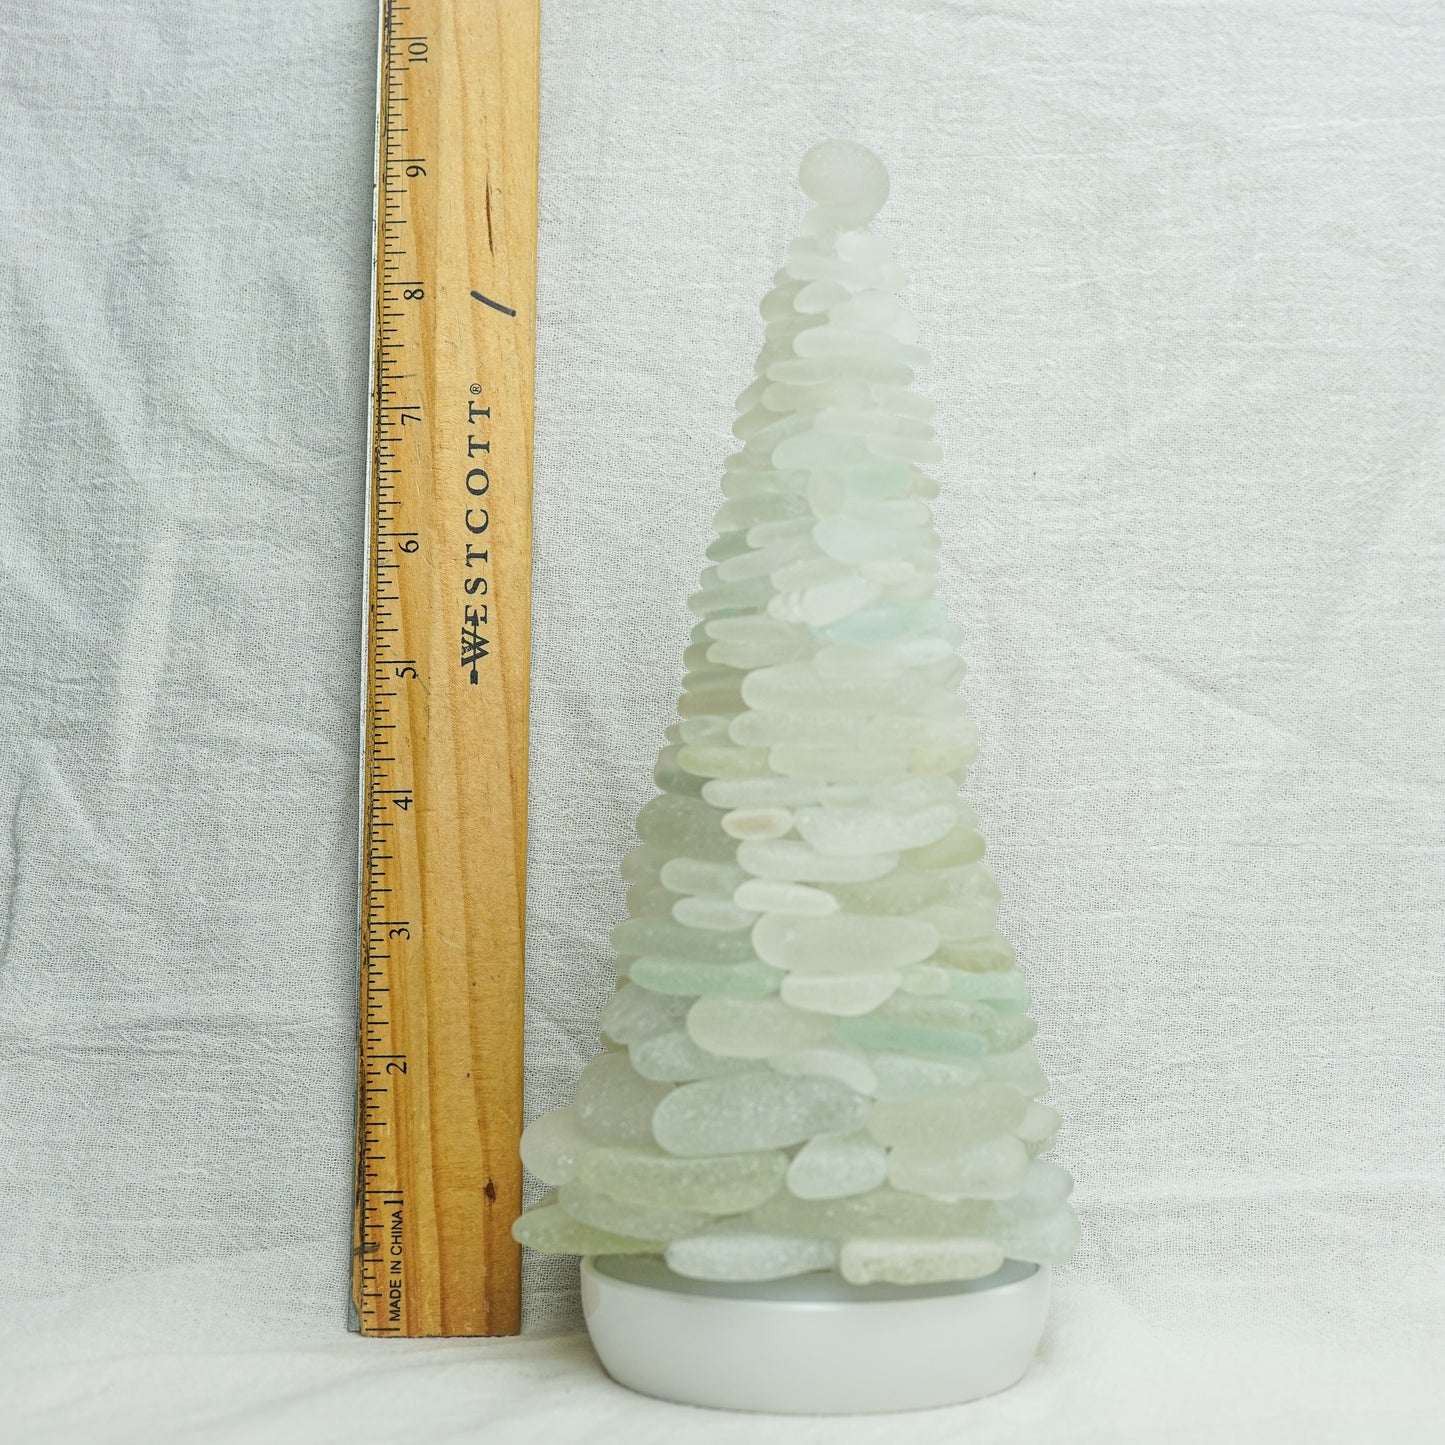 White Sea Glass Tree UK Topper